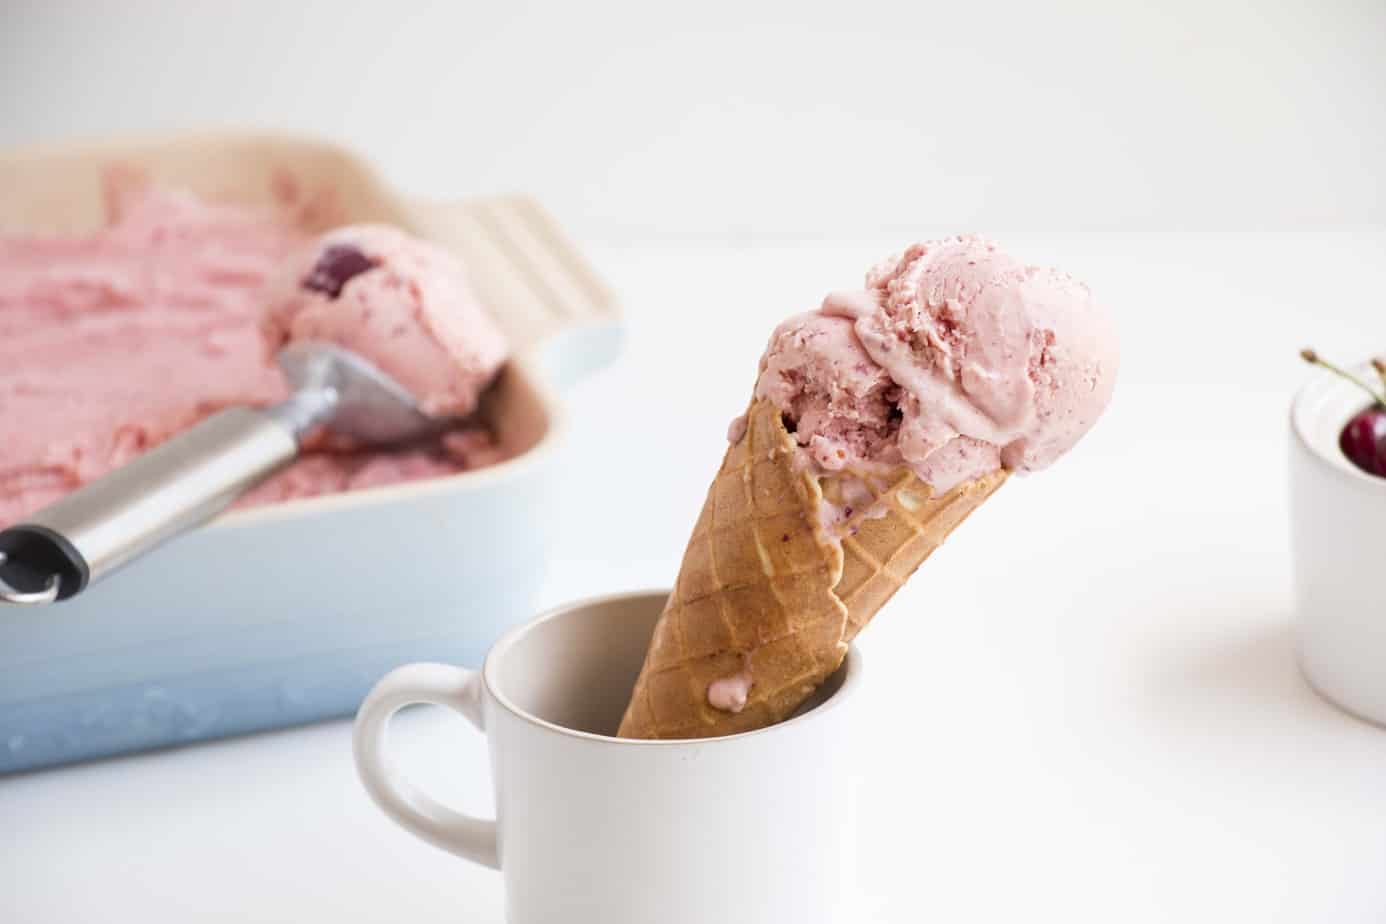 Creamy Homemade Cherry Ice Cream - A delicious, easy to make homemade ice cream recipe.